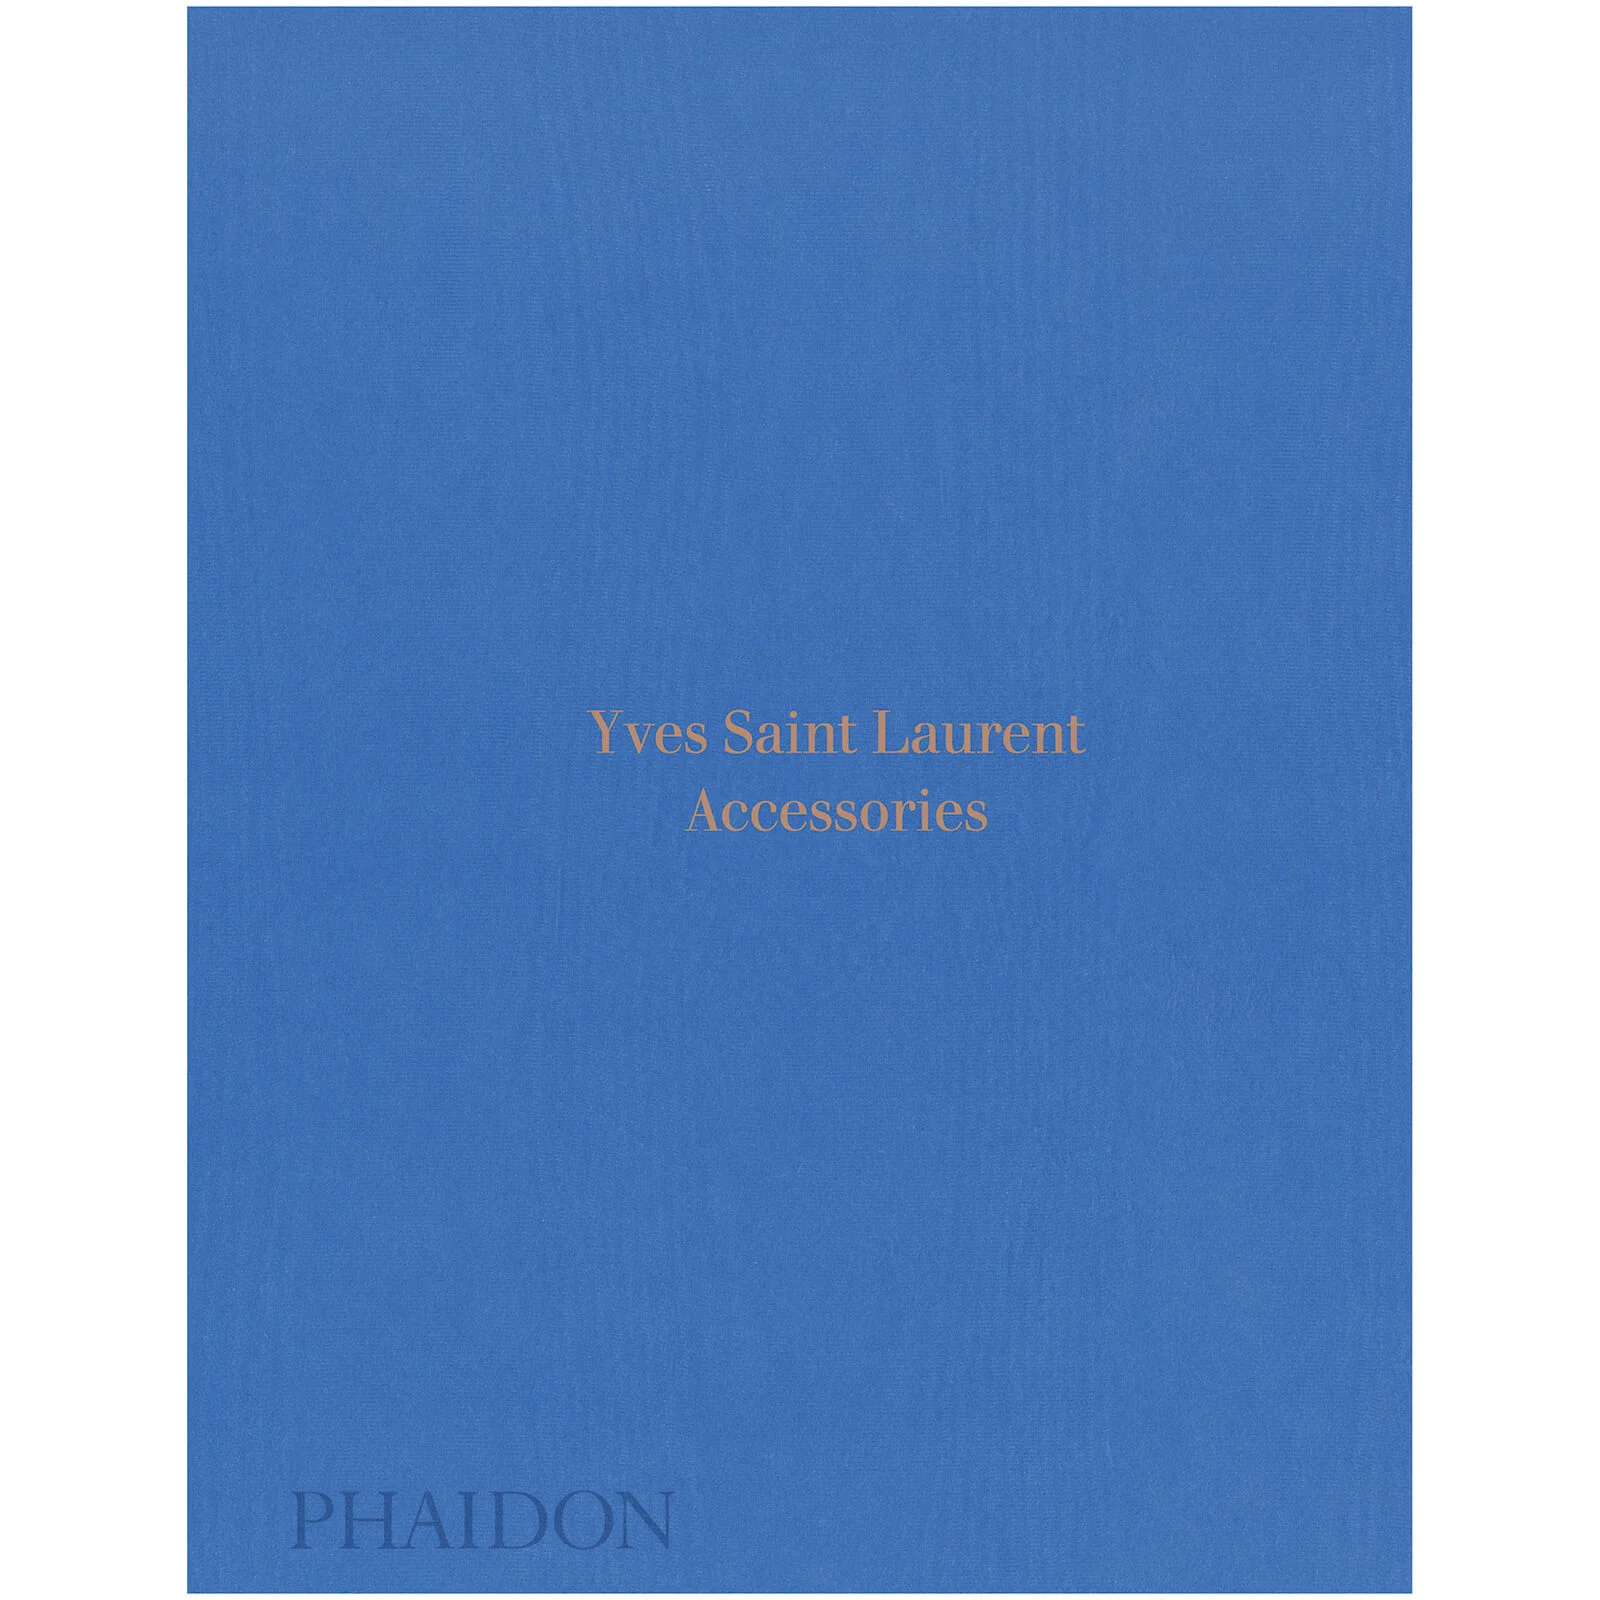 Phaidon Books: Yves Saint Laurent Accessories Image 1